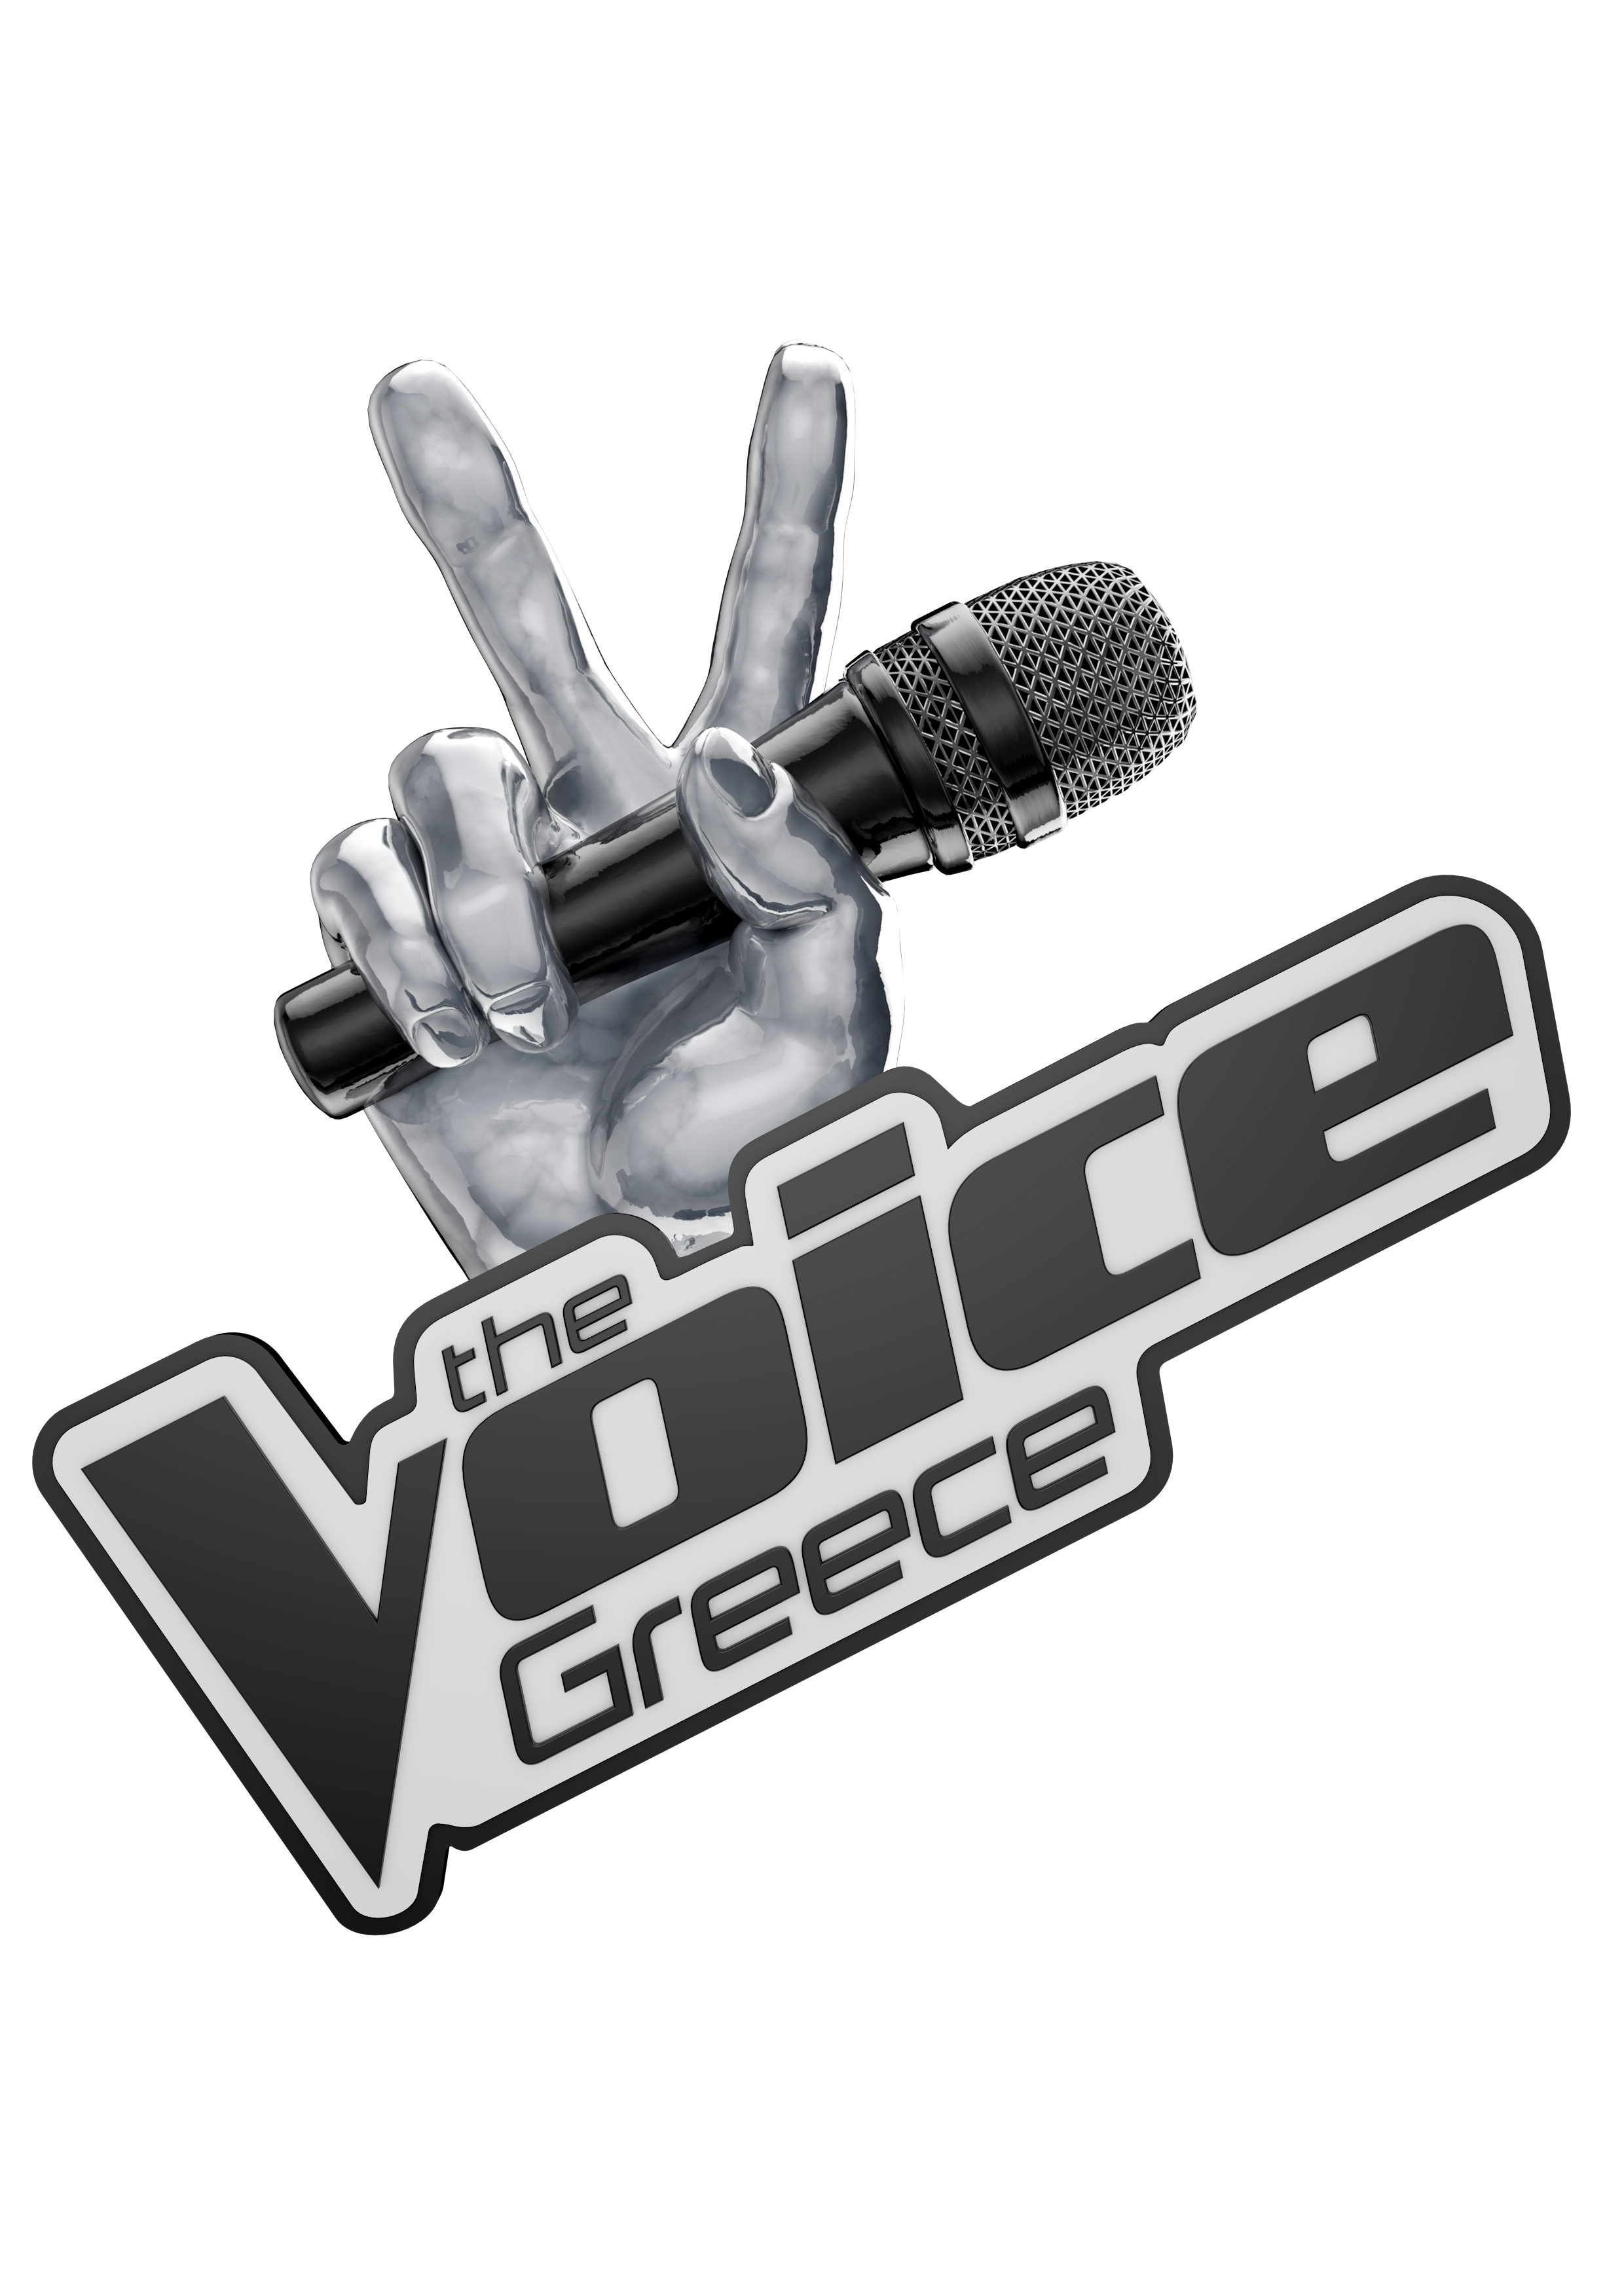 “The Voice”: Αρχίζουν οι οντισιόν